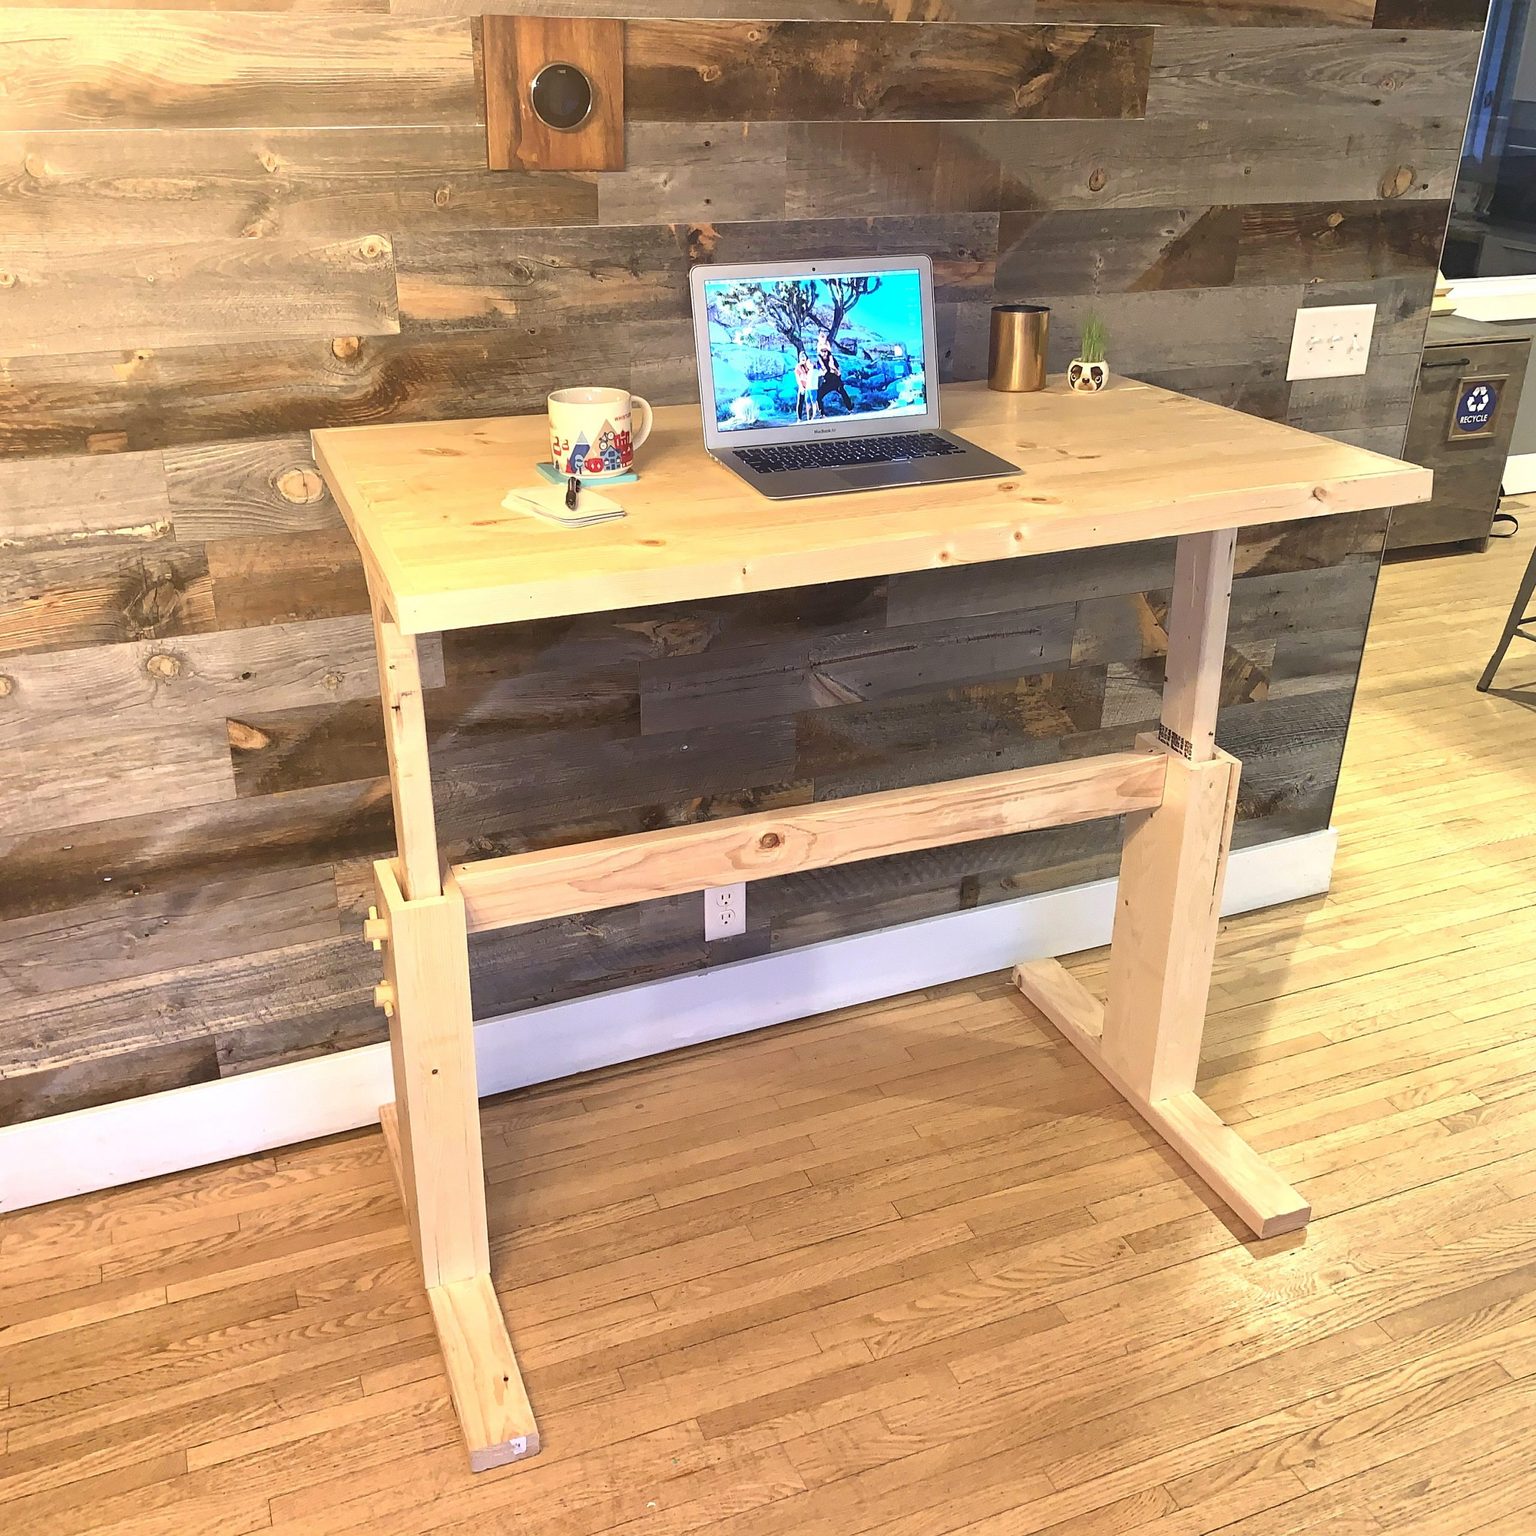 How to Make Your Own Adjustable DIY Desk | Family Handyman